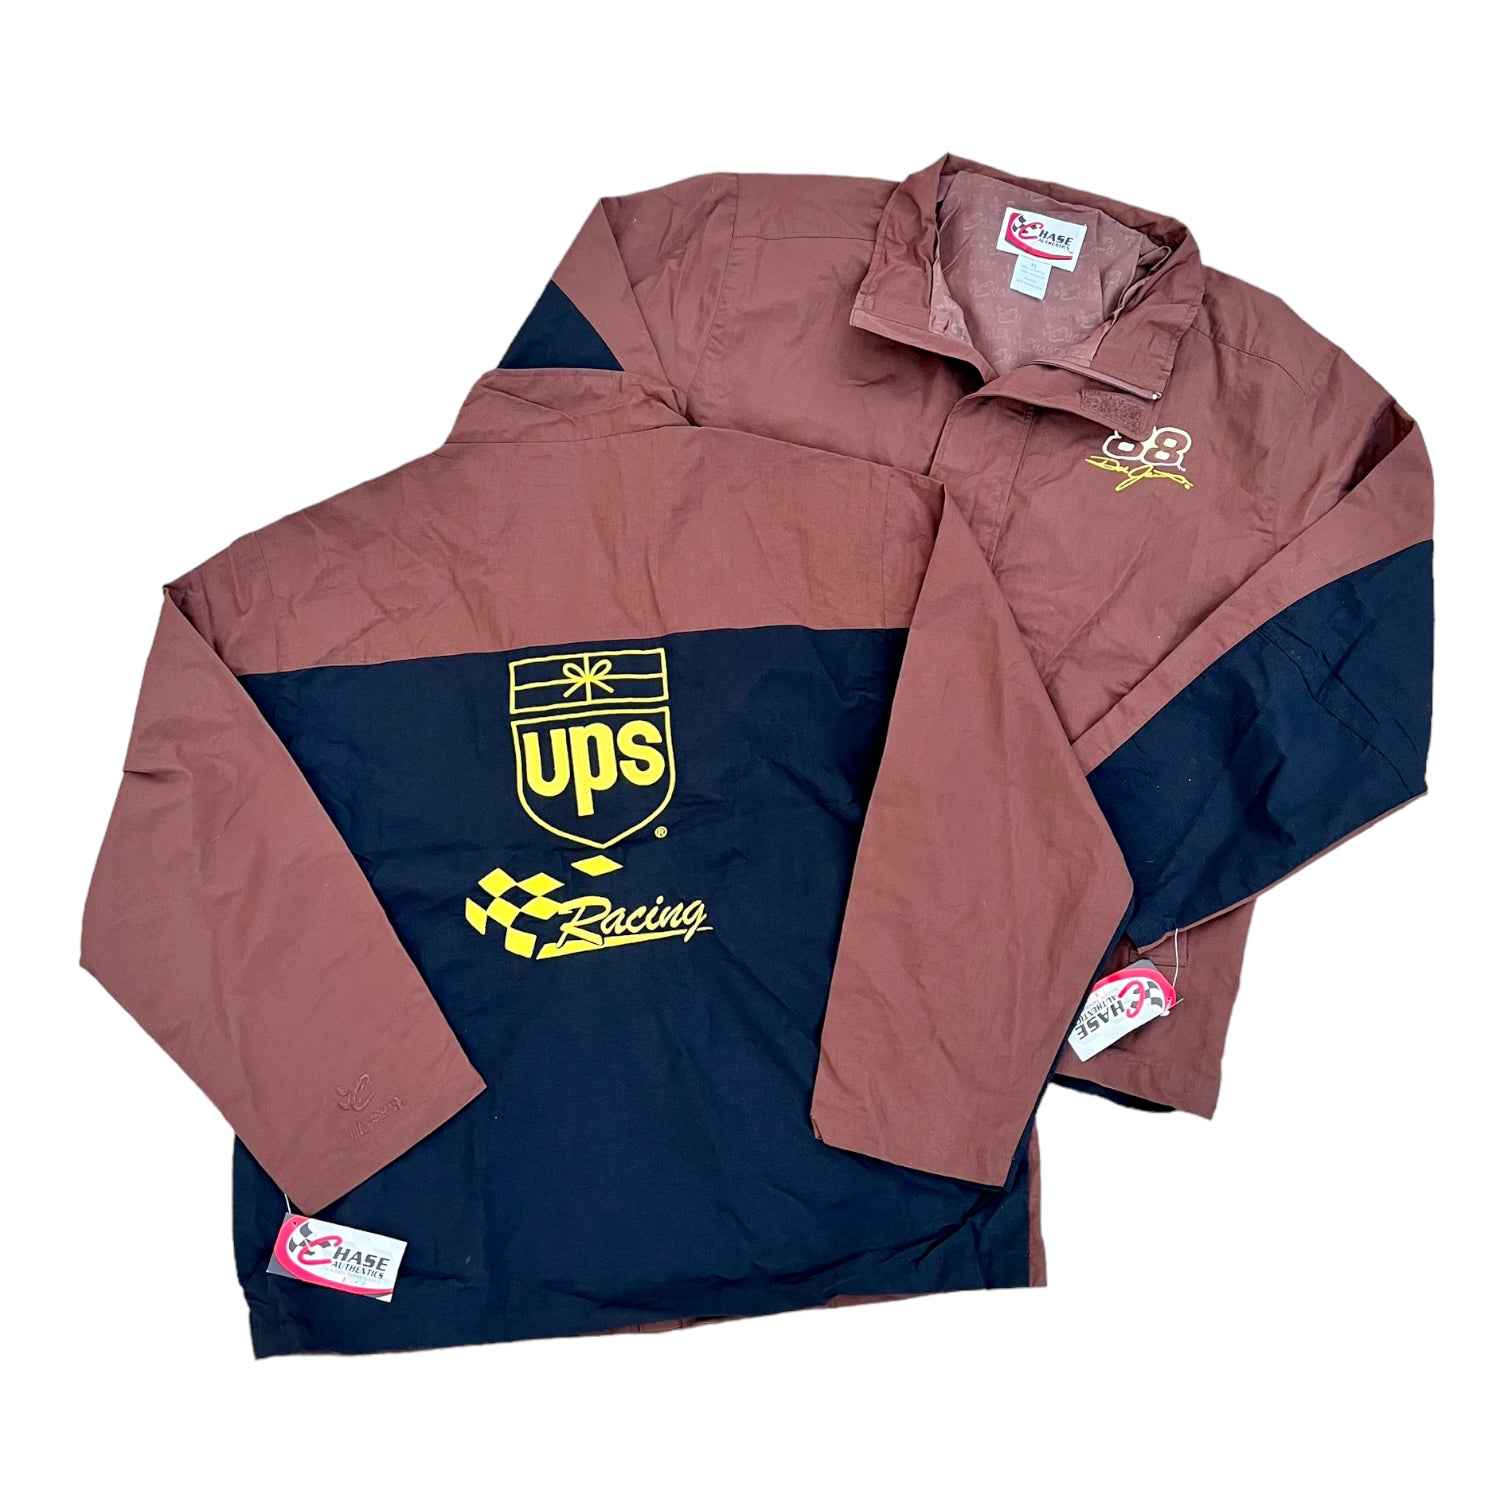 New UPS Wind Jacket (XL)